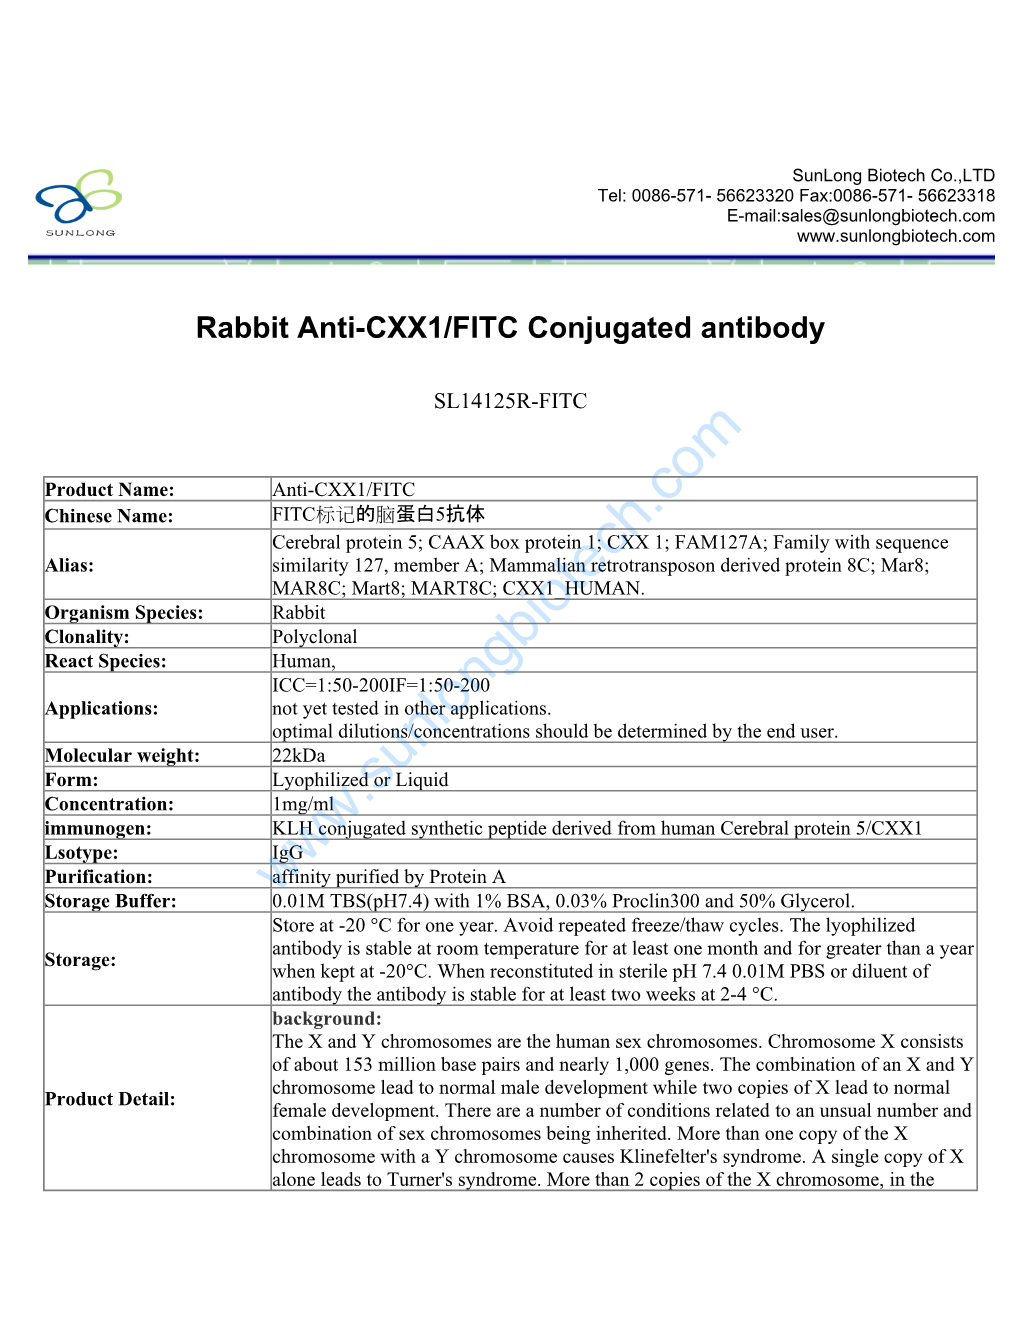 Rabbit Anti-CXX1/FITC Conjugated Antibody-SL14125R-FITC